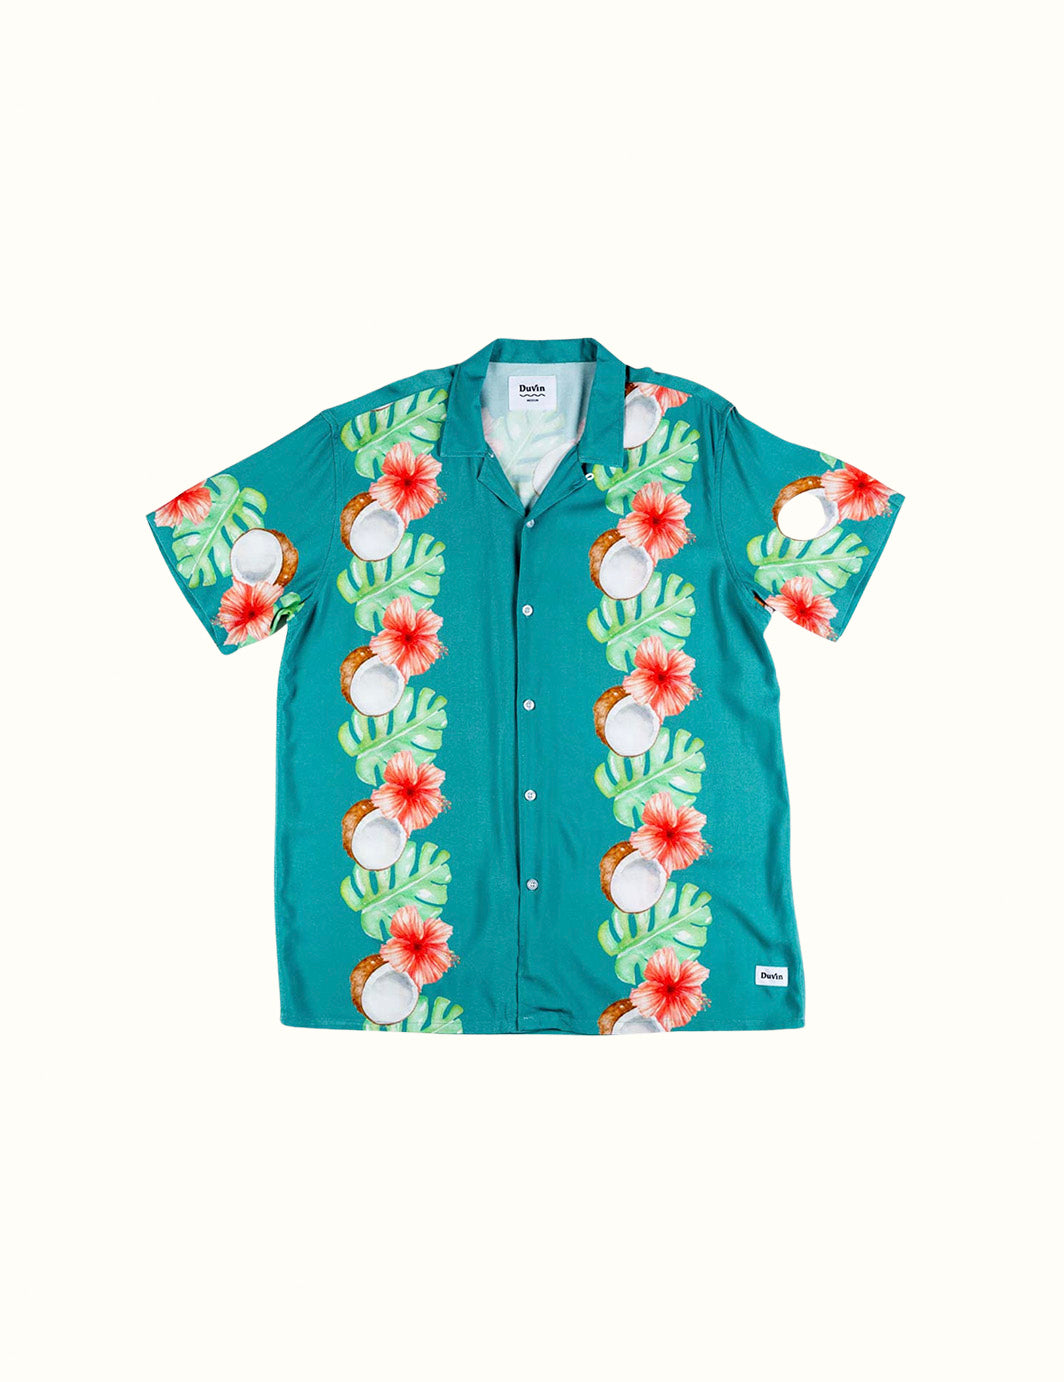 Tropical Coconut Buttonup Shirt